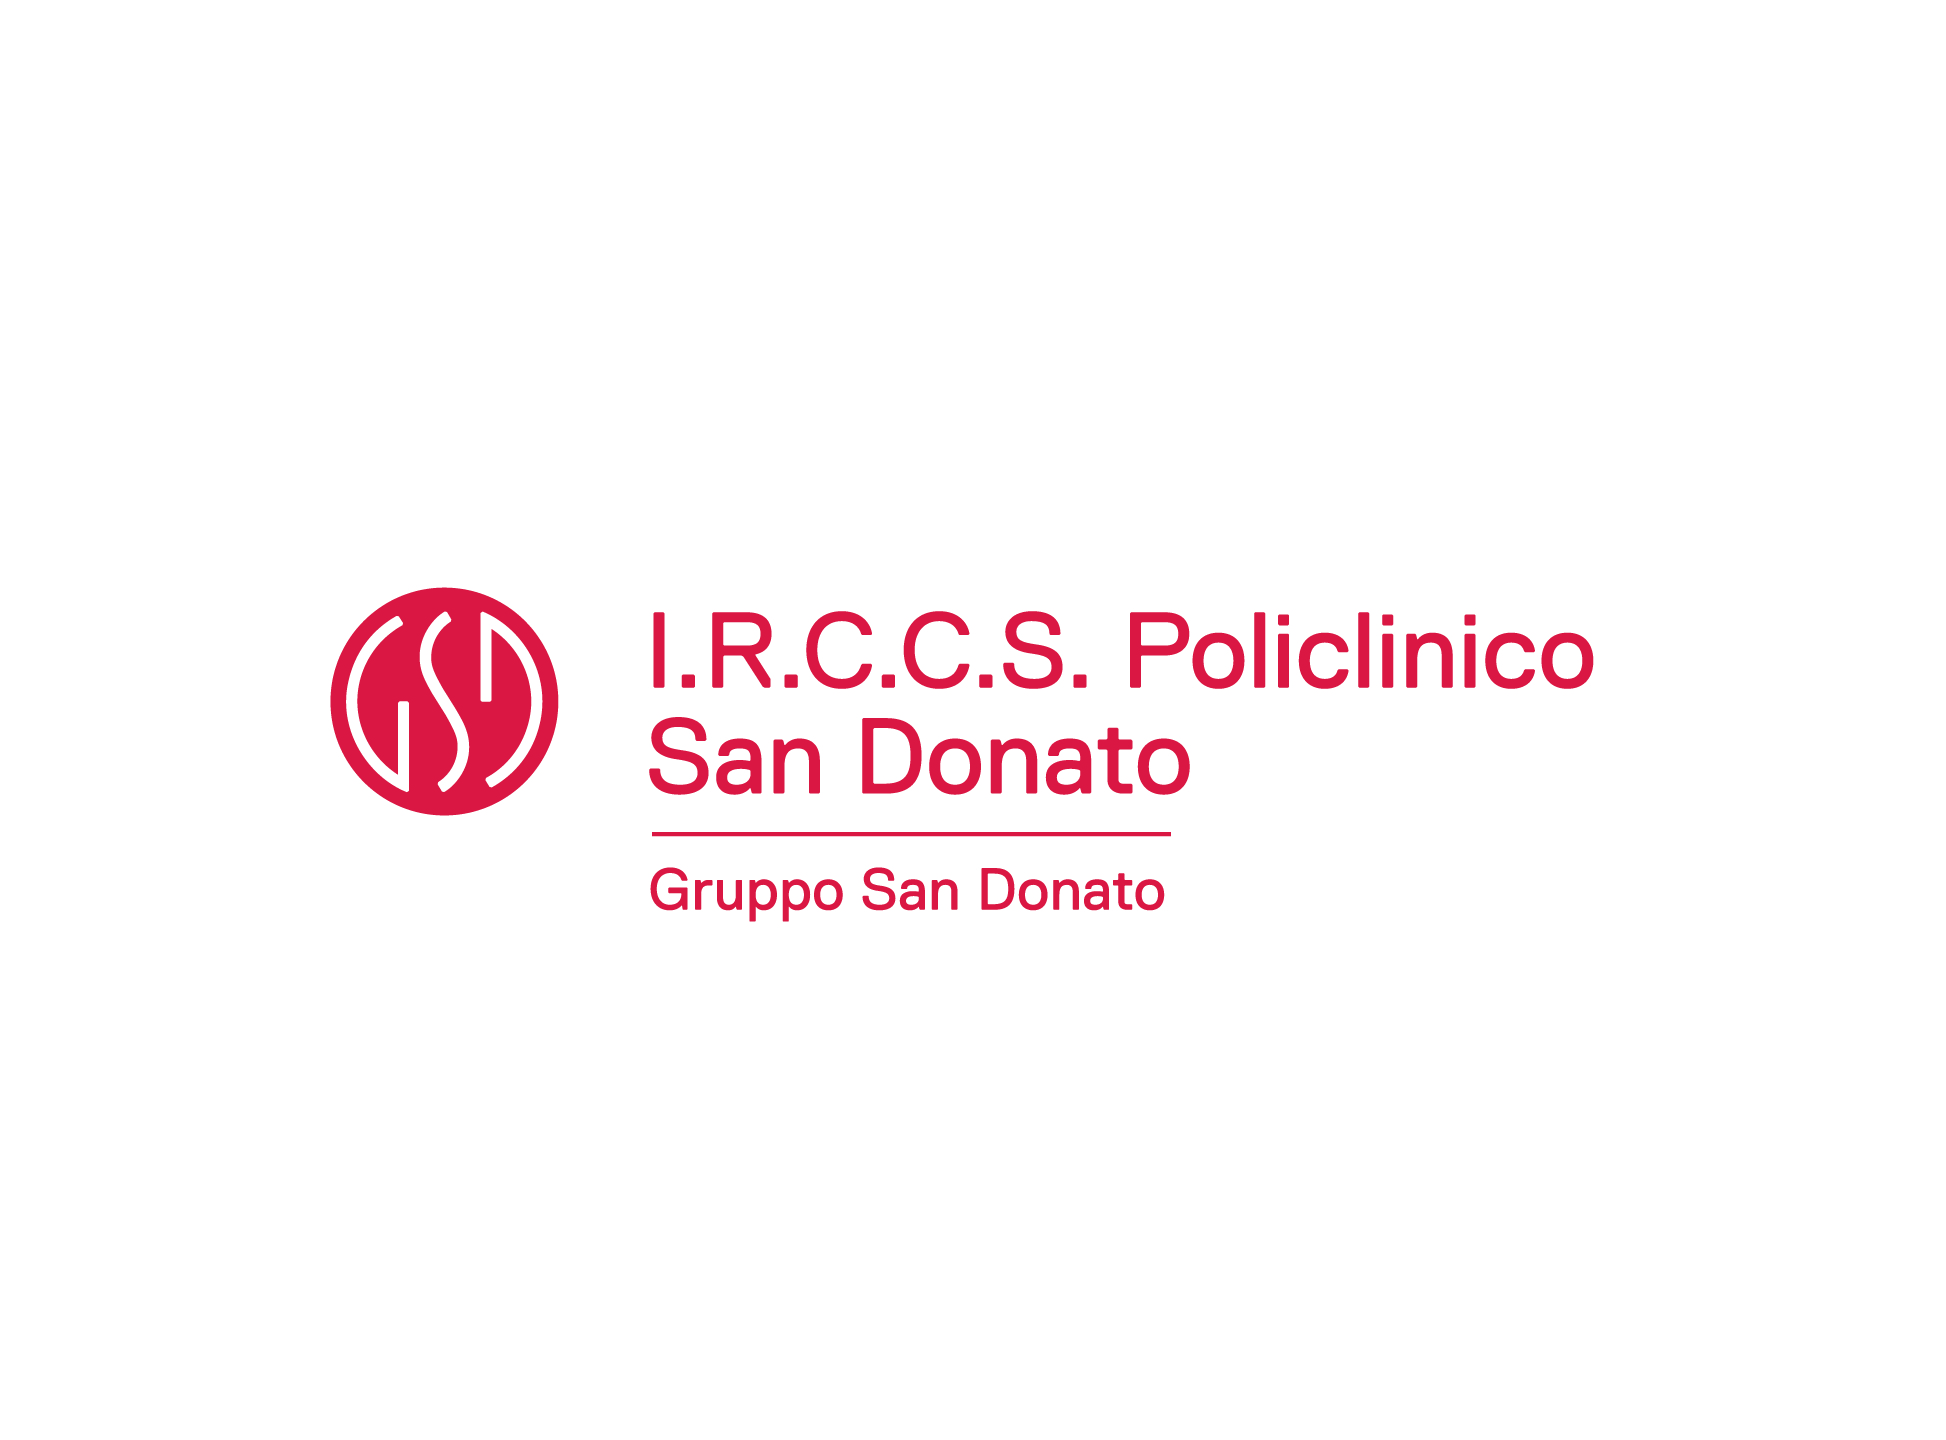 Logo of IRCCS Policlinico San Donato